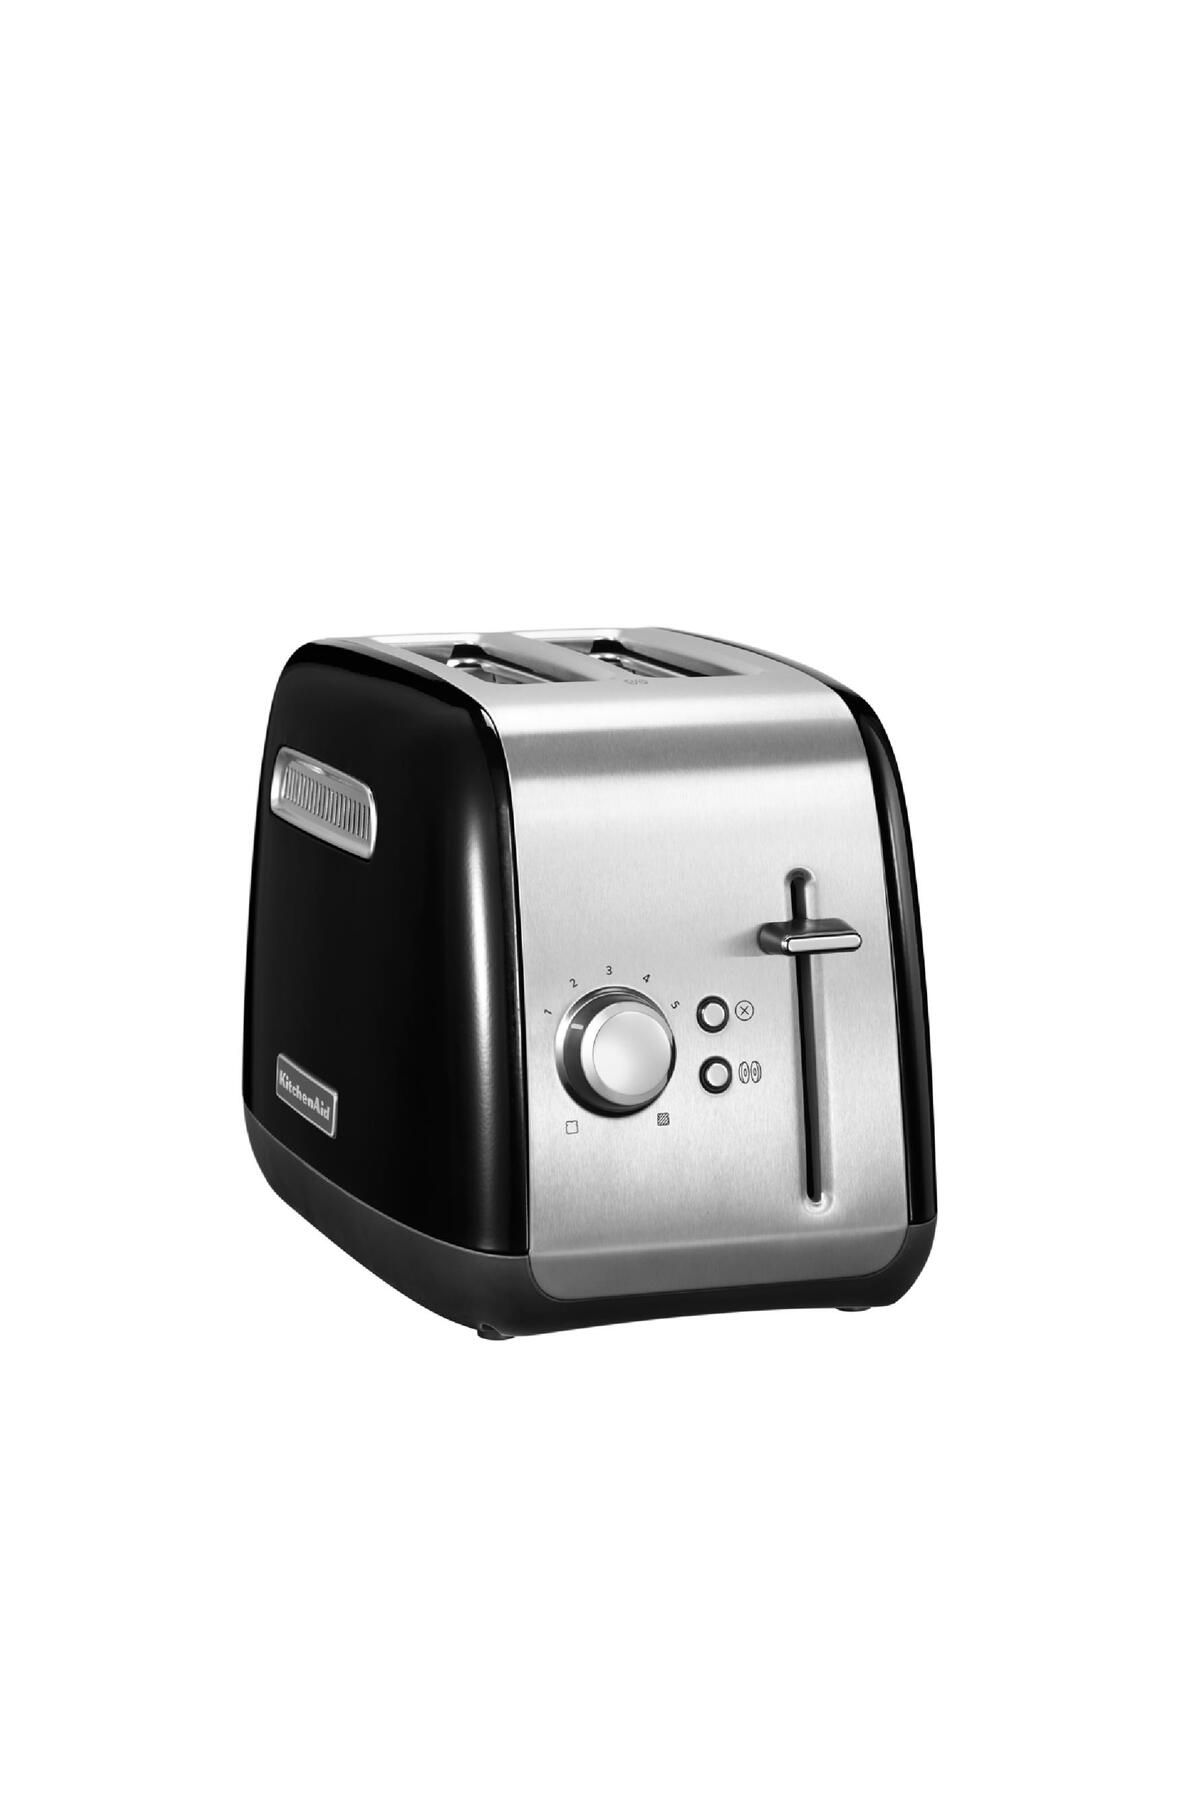 Kitchenaid Classic 2 Dilim Ekmek Kızartma Makinesi - 5KMT2115